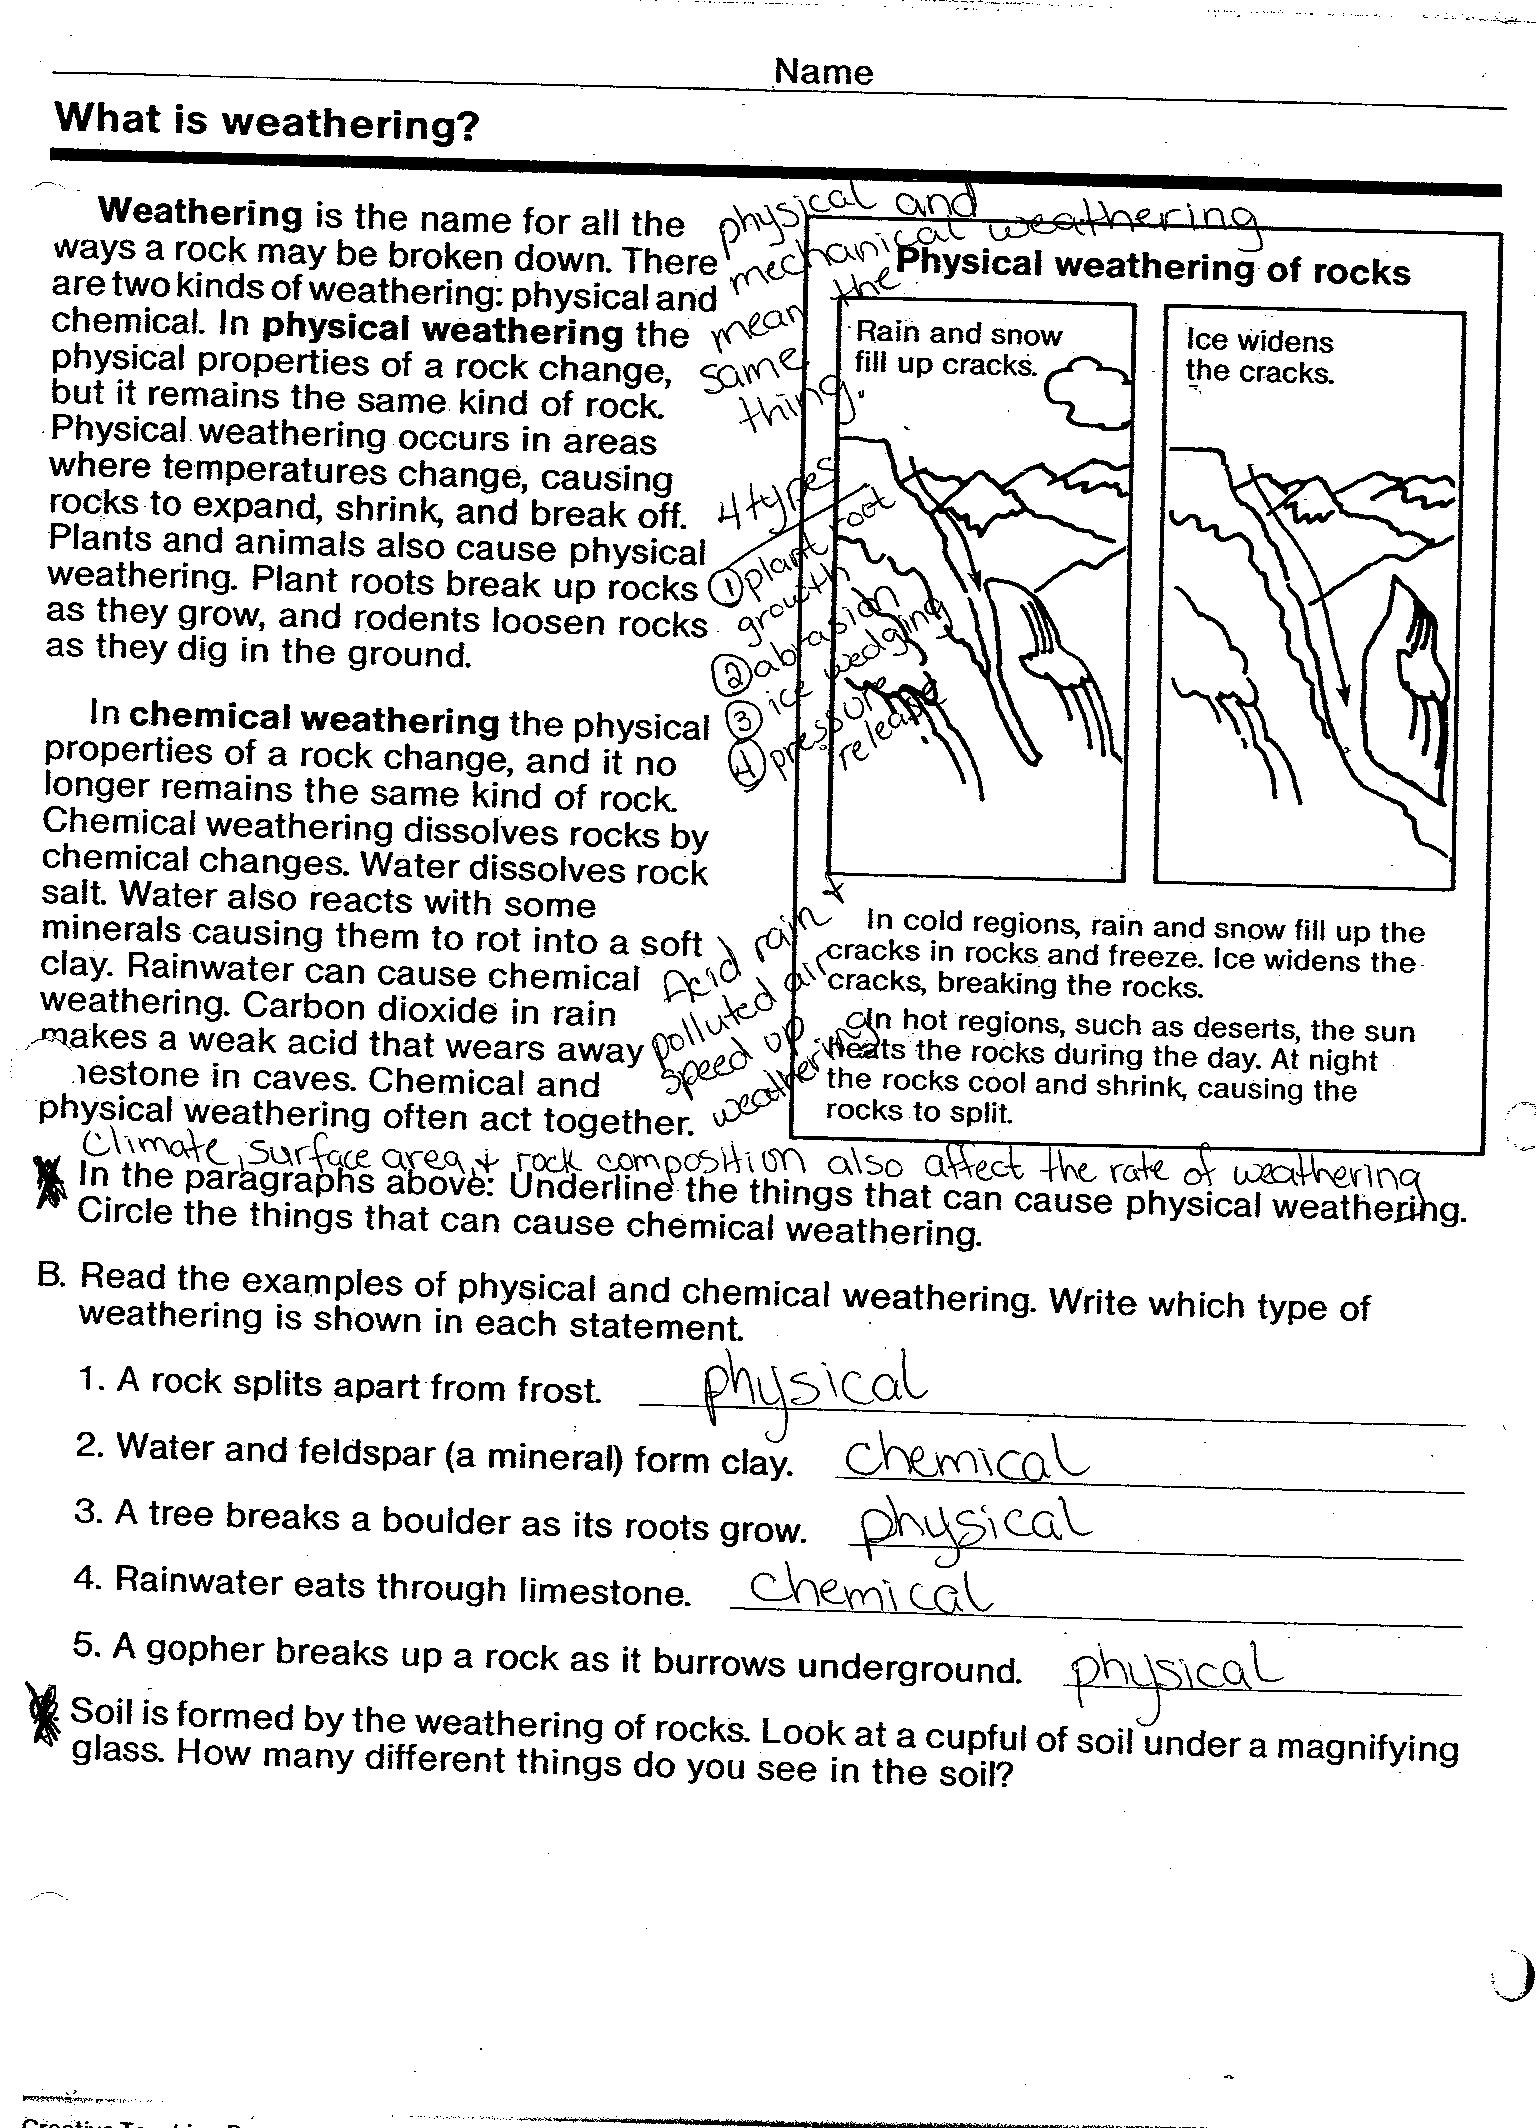 Erosion and Deposition Worksheet 28 [ Weathering Erosion and Deposition Worksheet